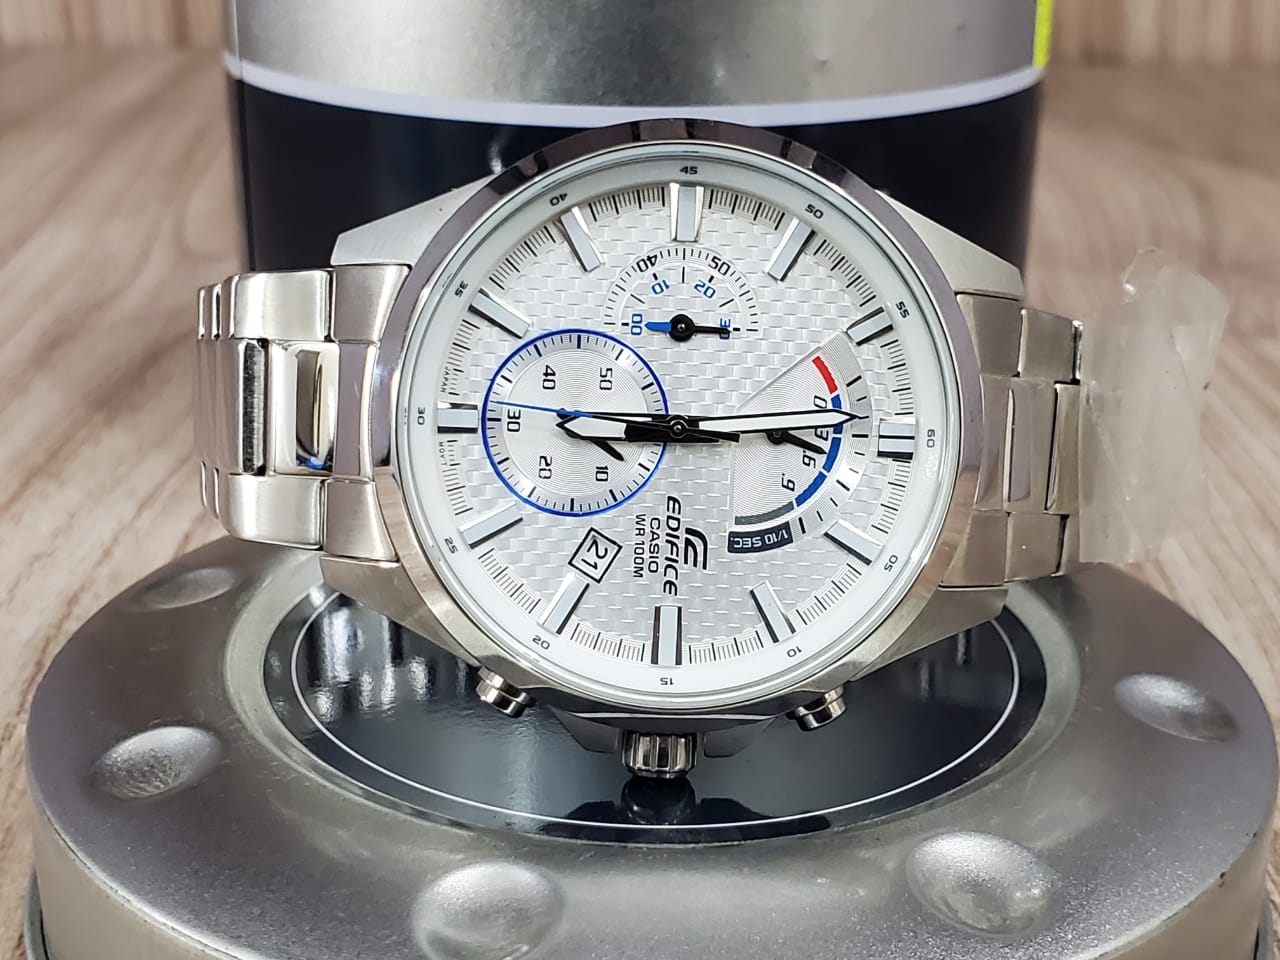 Casio Men’s Edifice Quartz Watch with Stainless-Steel Strap, Silver, 22 (Model: EFV-530D)